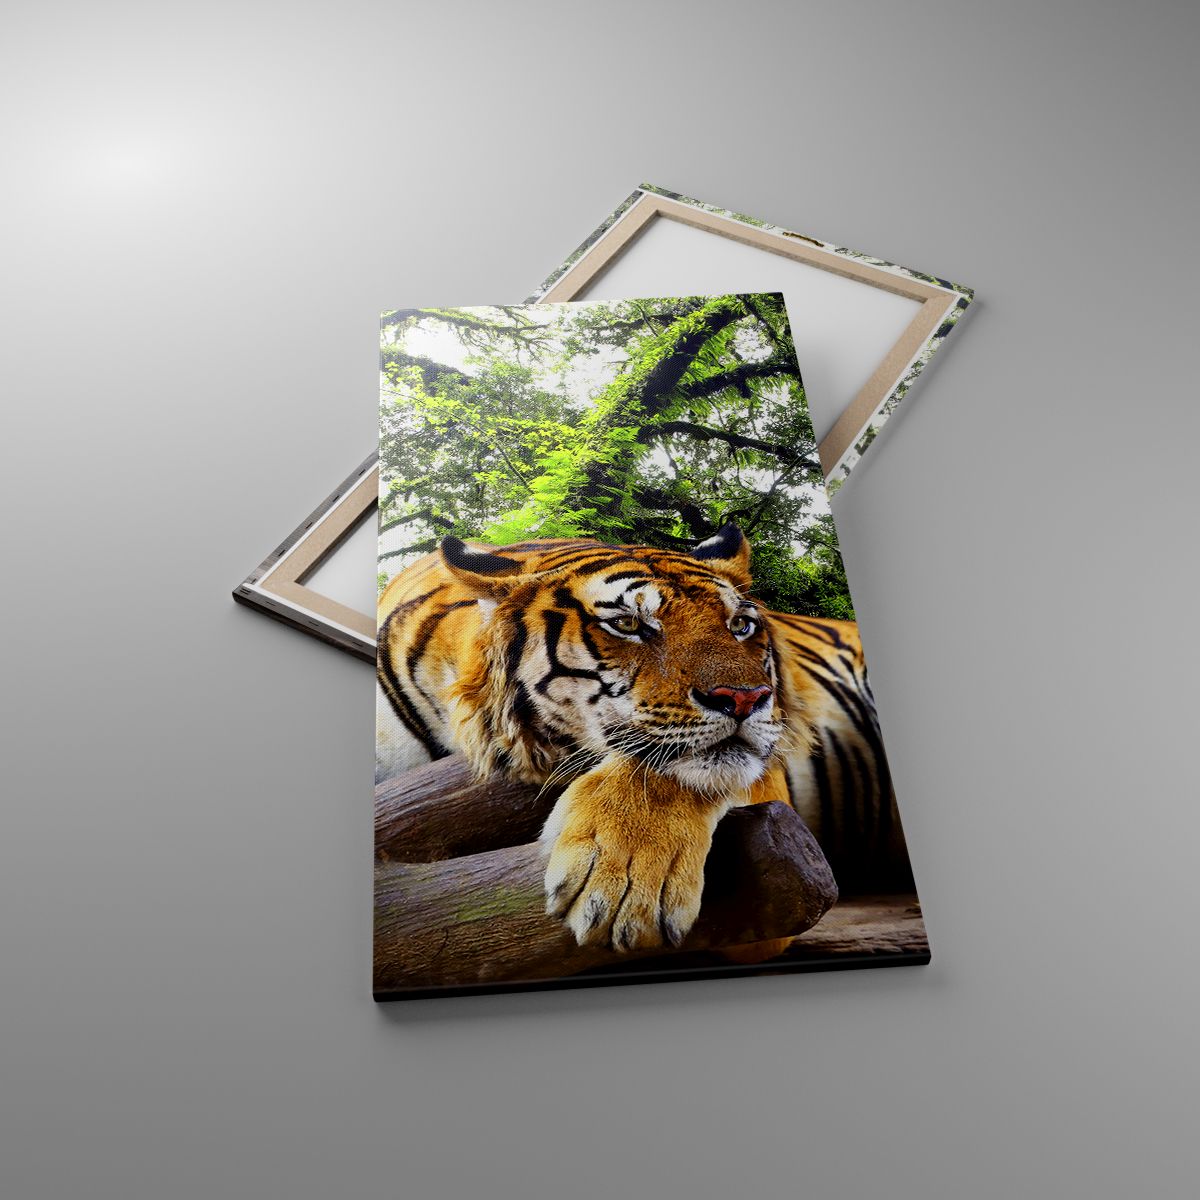 Obrazy Tygrys, Obrazy Zwierzęta, Obrazy Drapieżnik, Obrazy Natura, Obrazy Dżungla